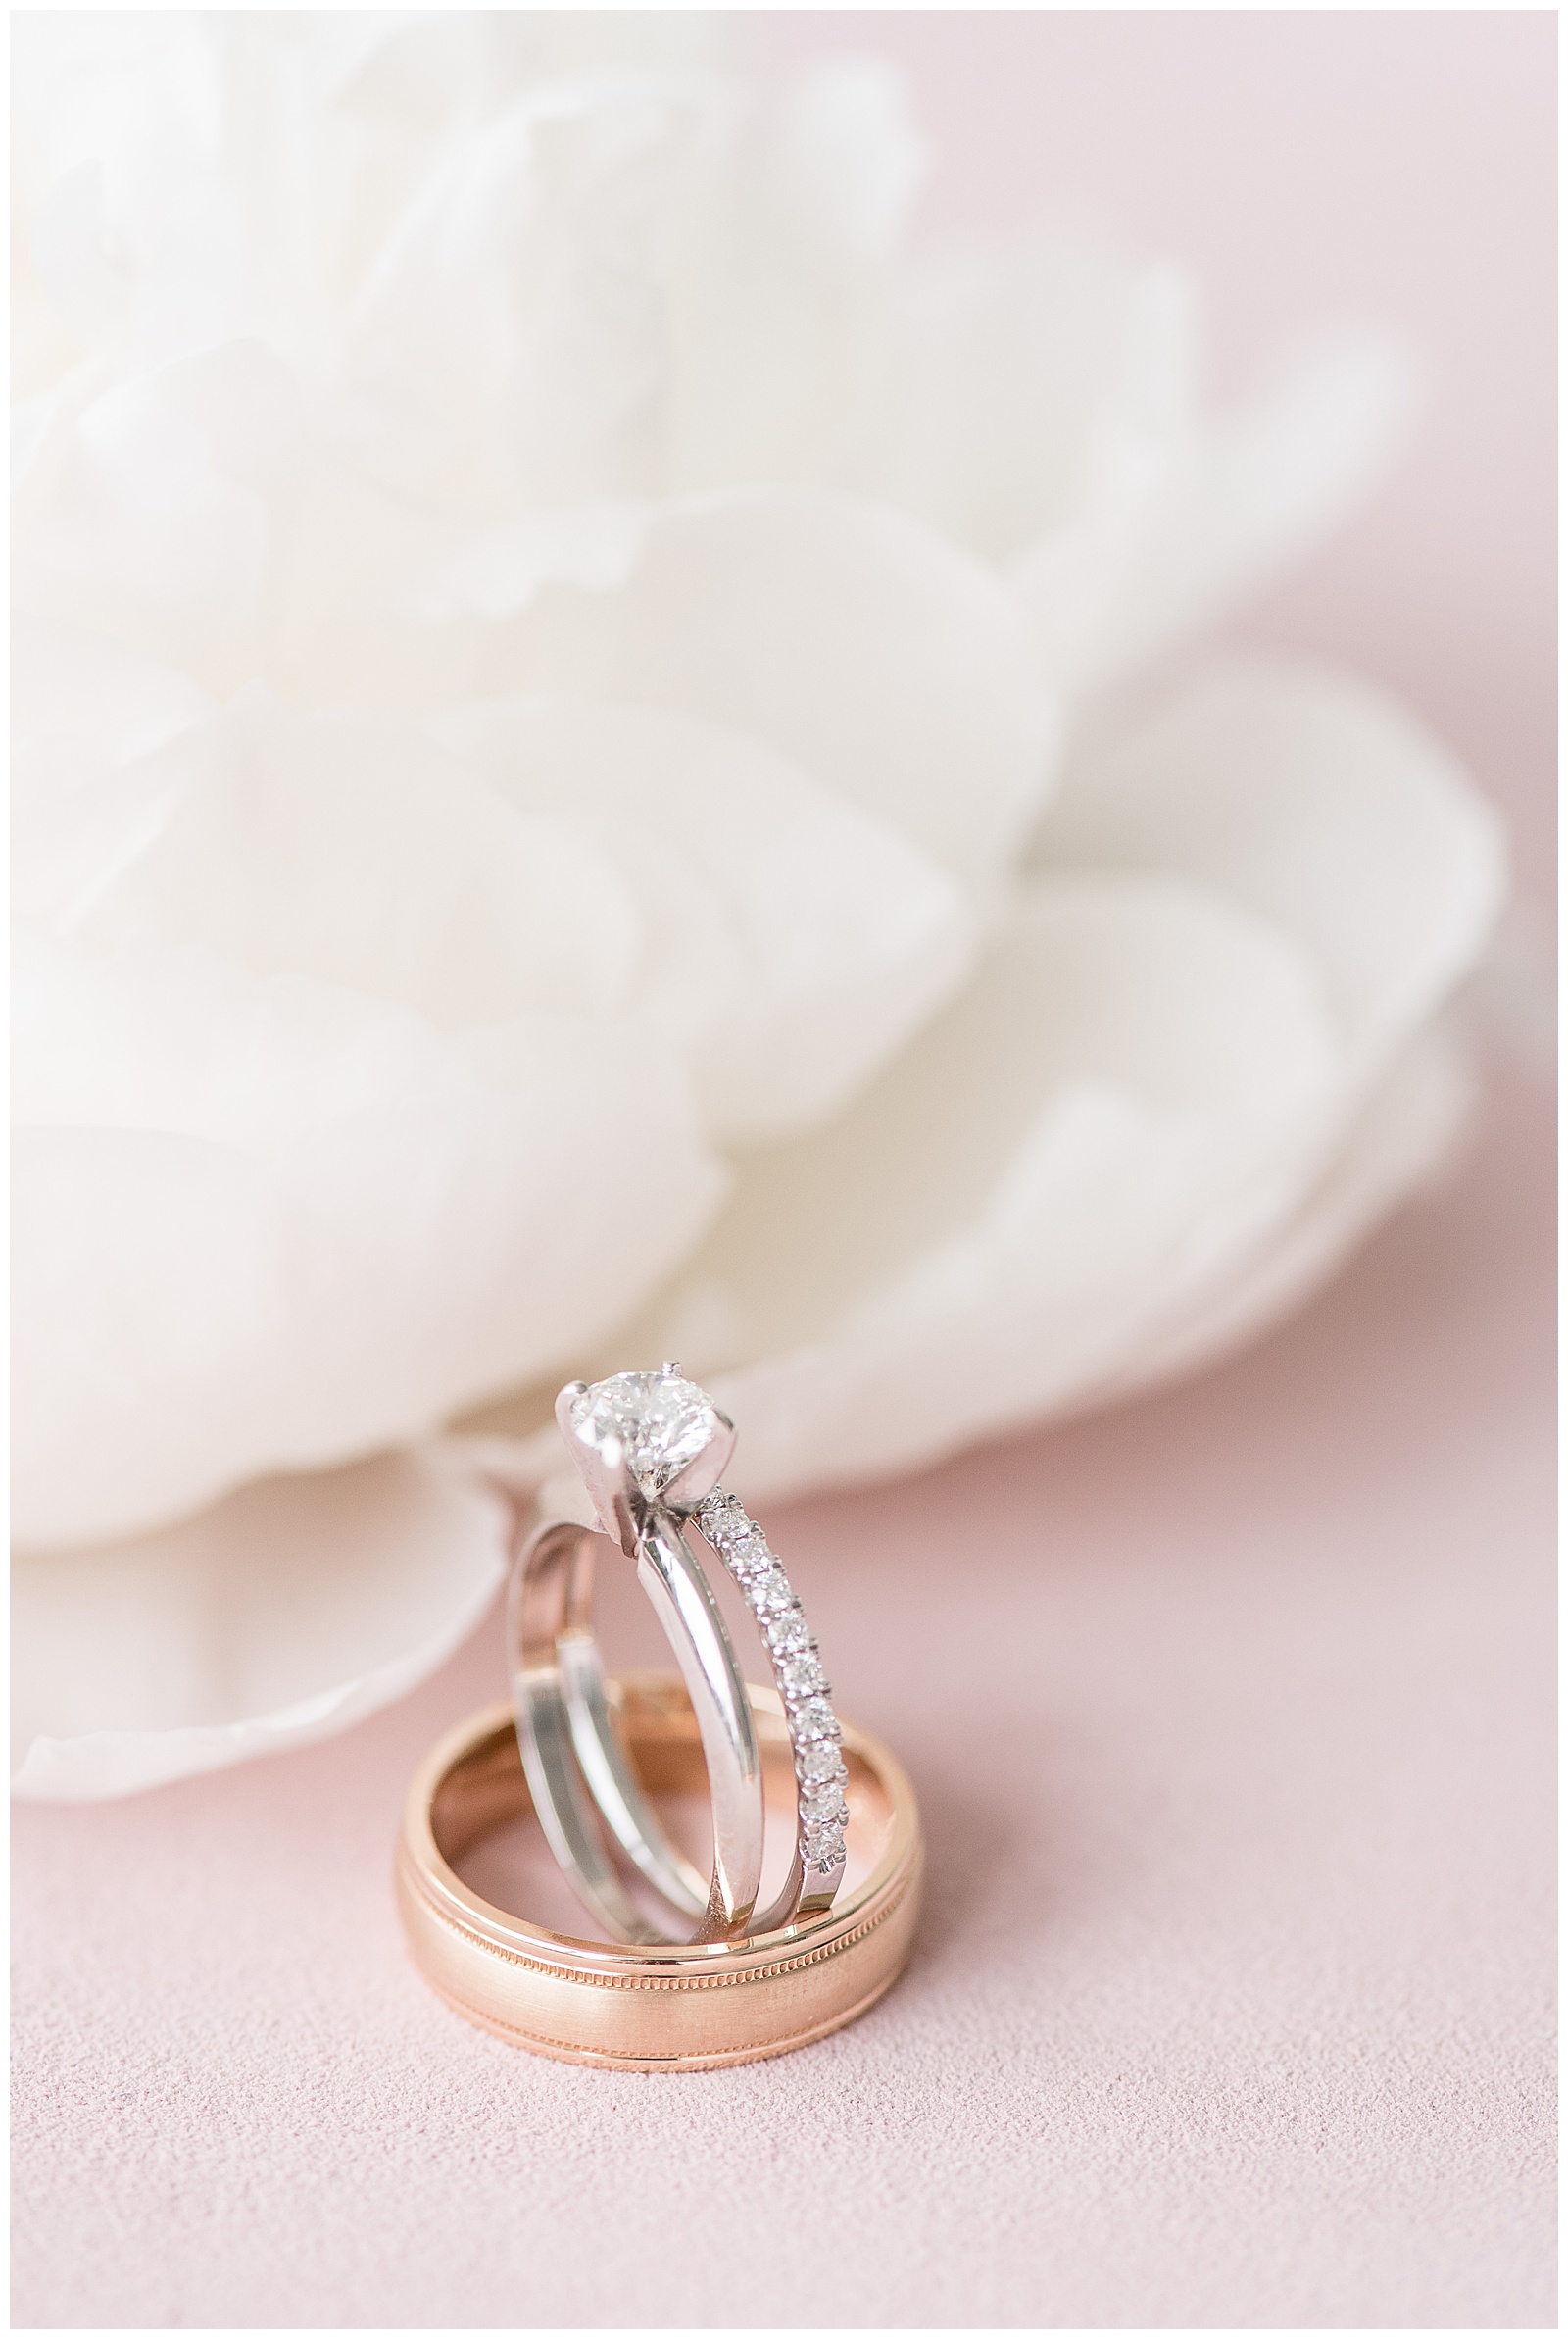 bride's rings balancing inside groom's wedding ring next to white peony on light pink display